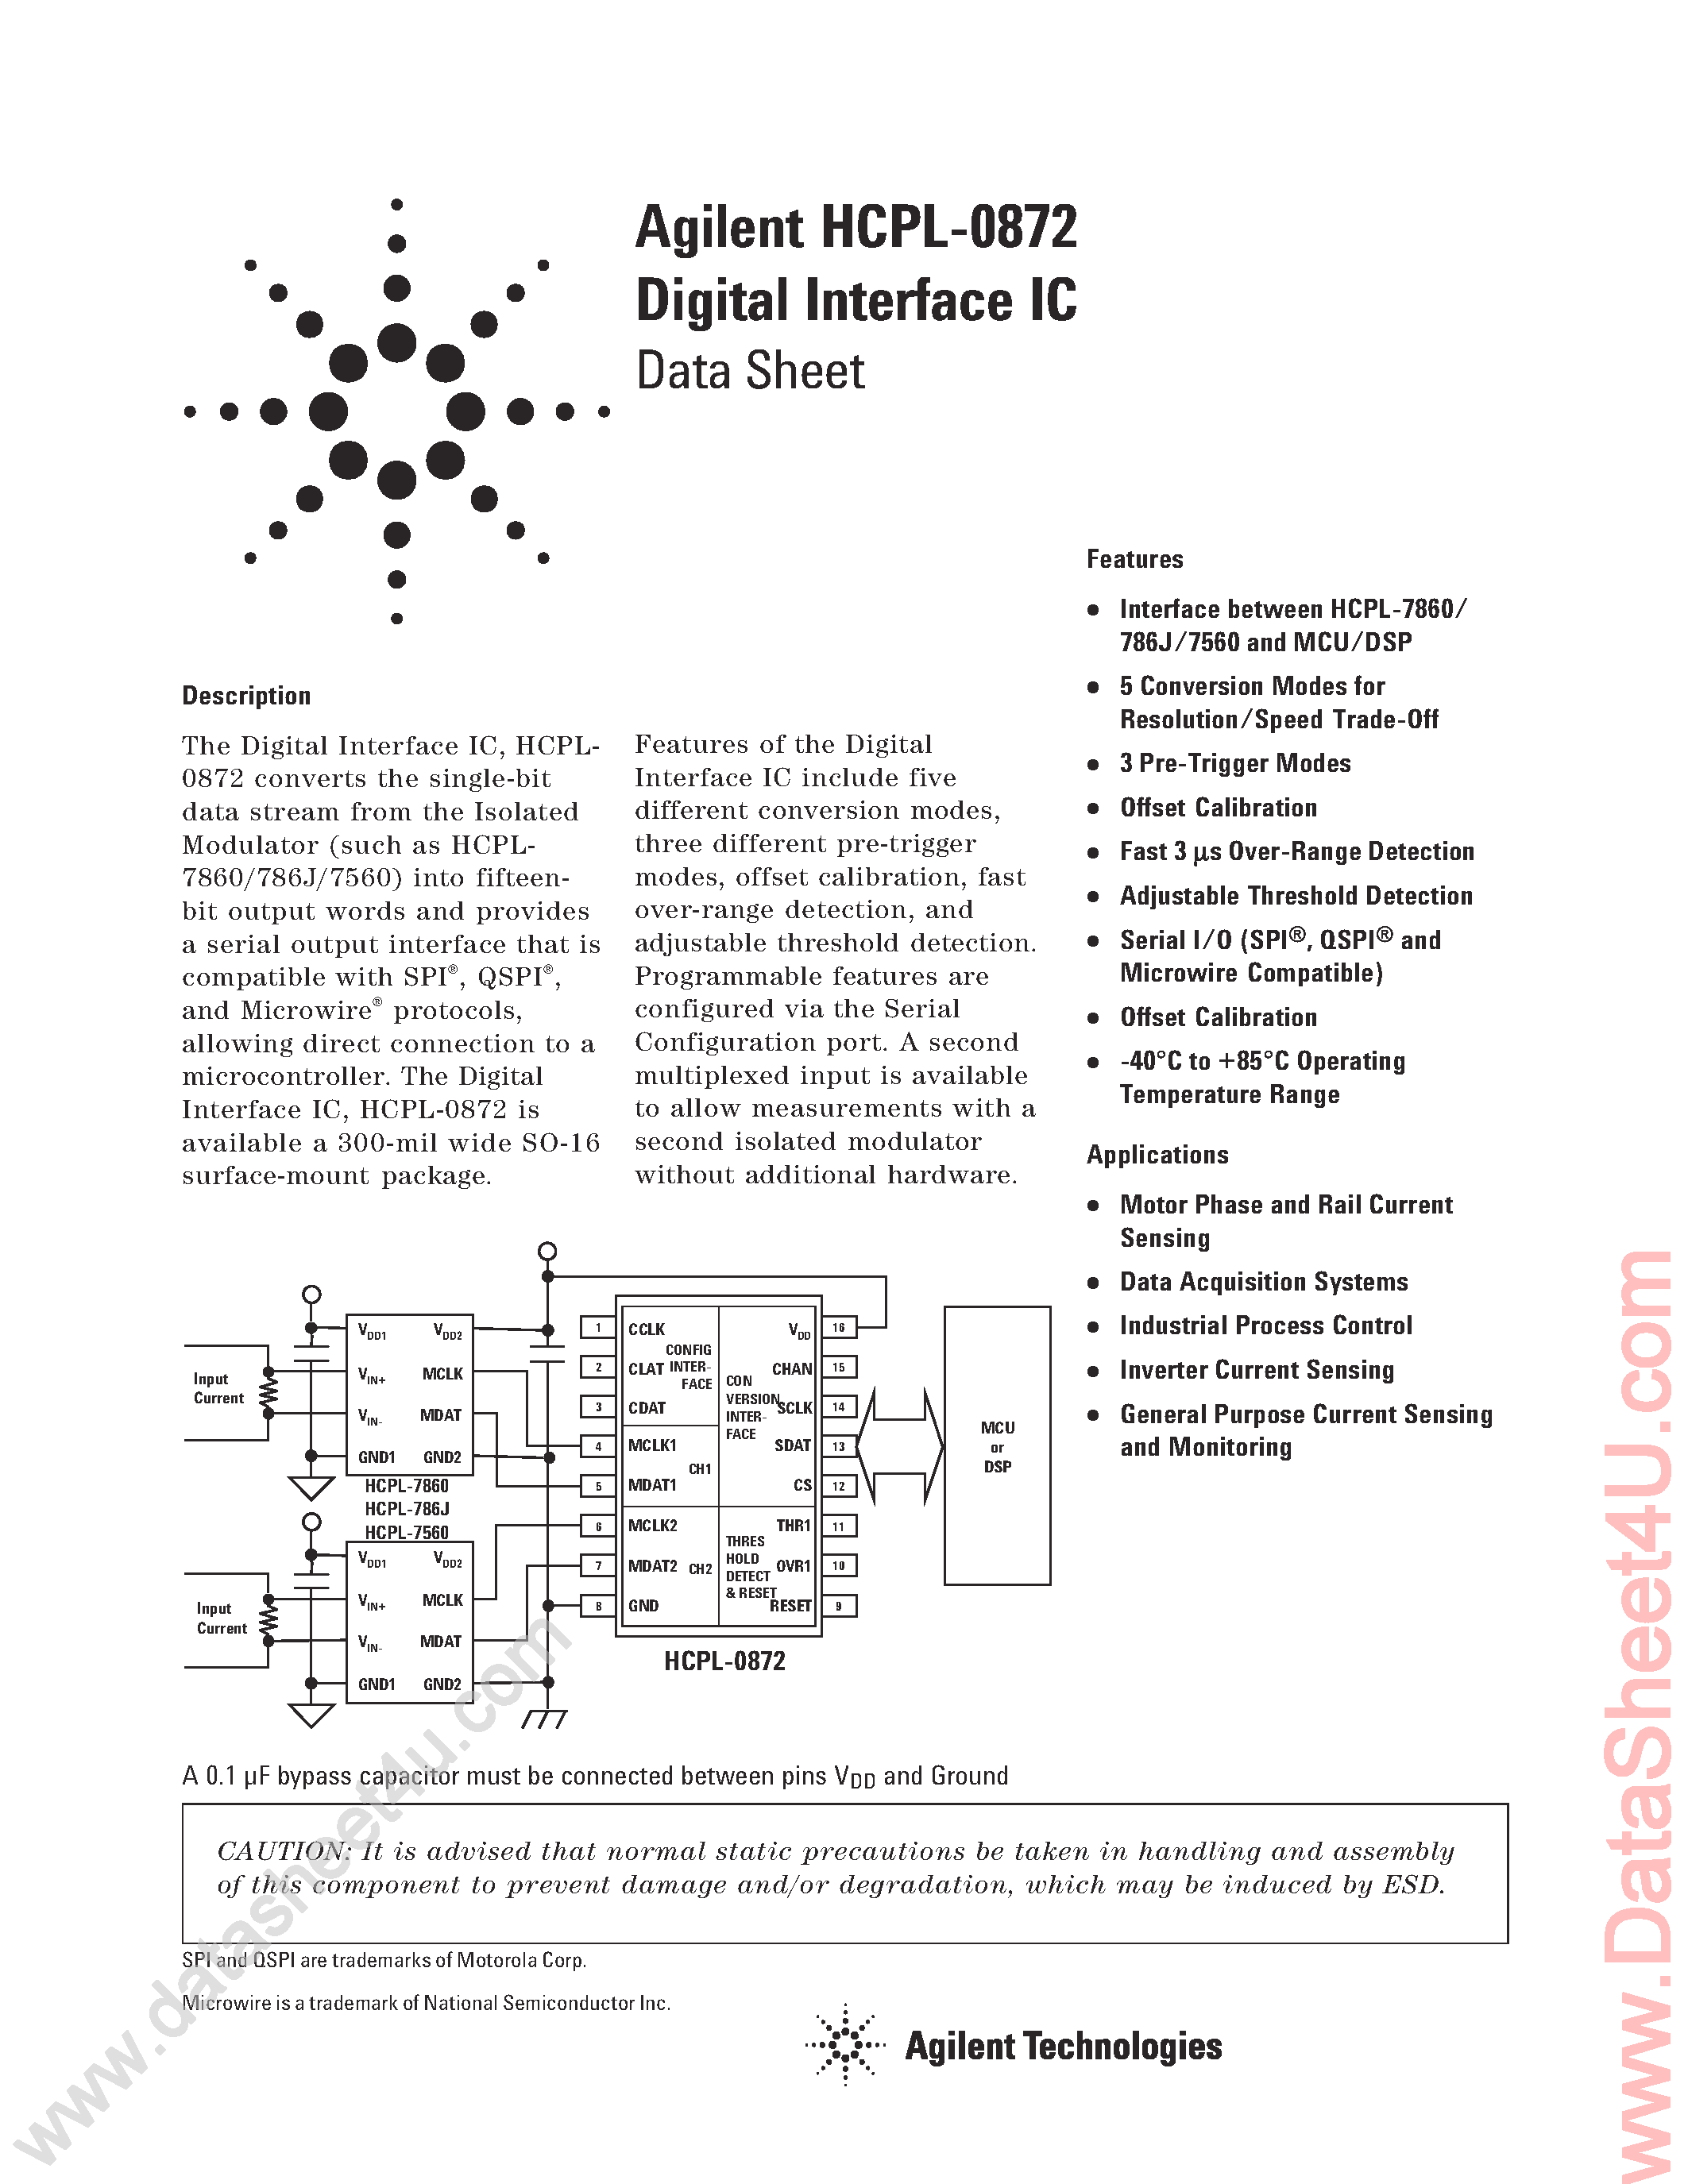 Даташит HCPL-0872 - Digital Interface IC страница 1